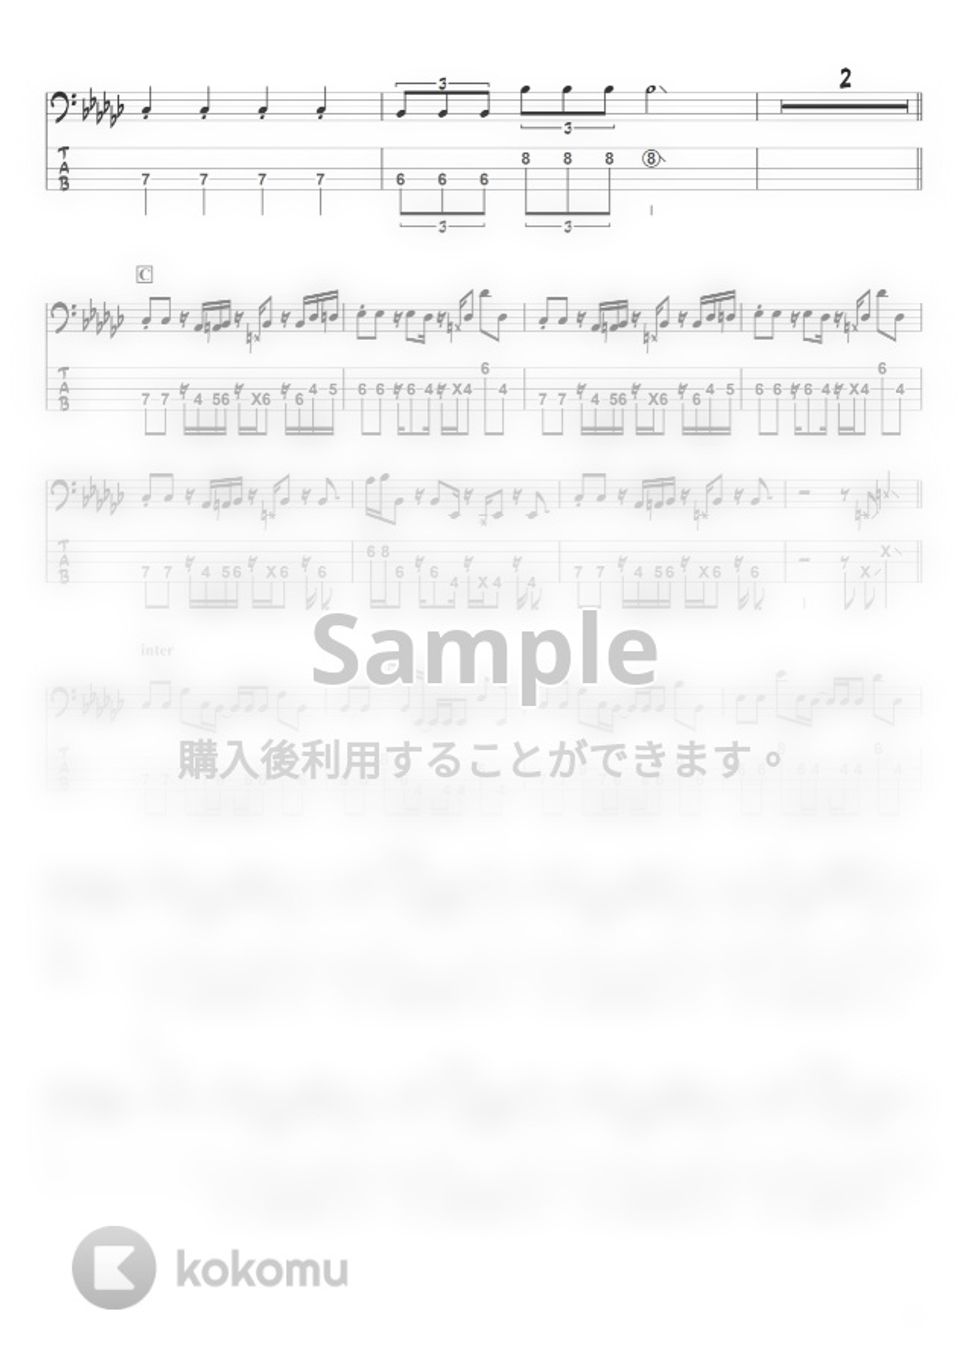 yama - 春を告げる (ベースTAB譜 / ☆5弦ベース対応) by swbass